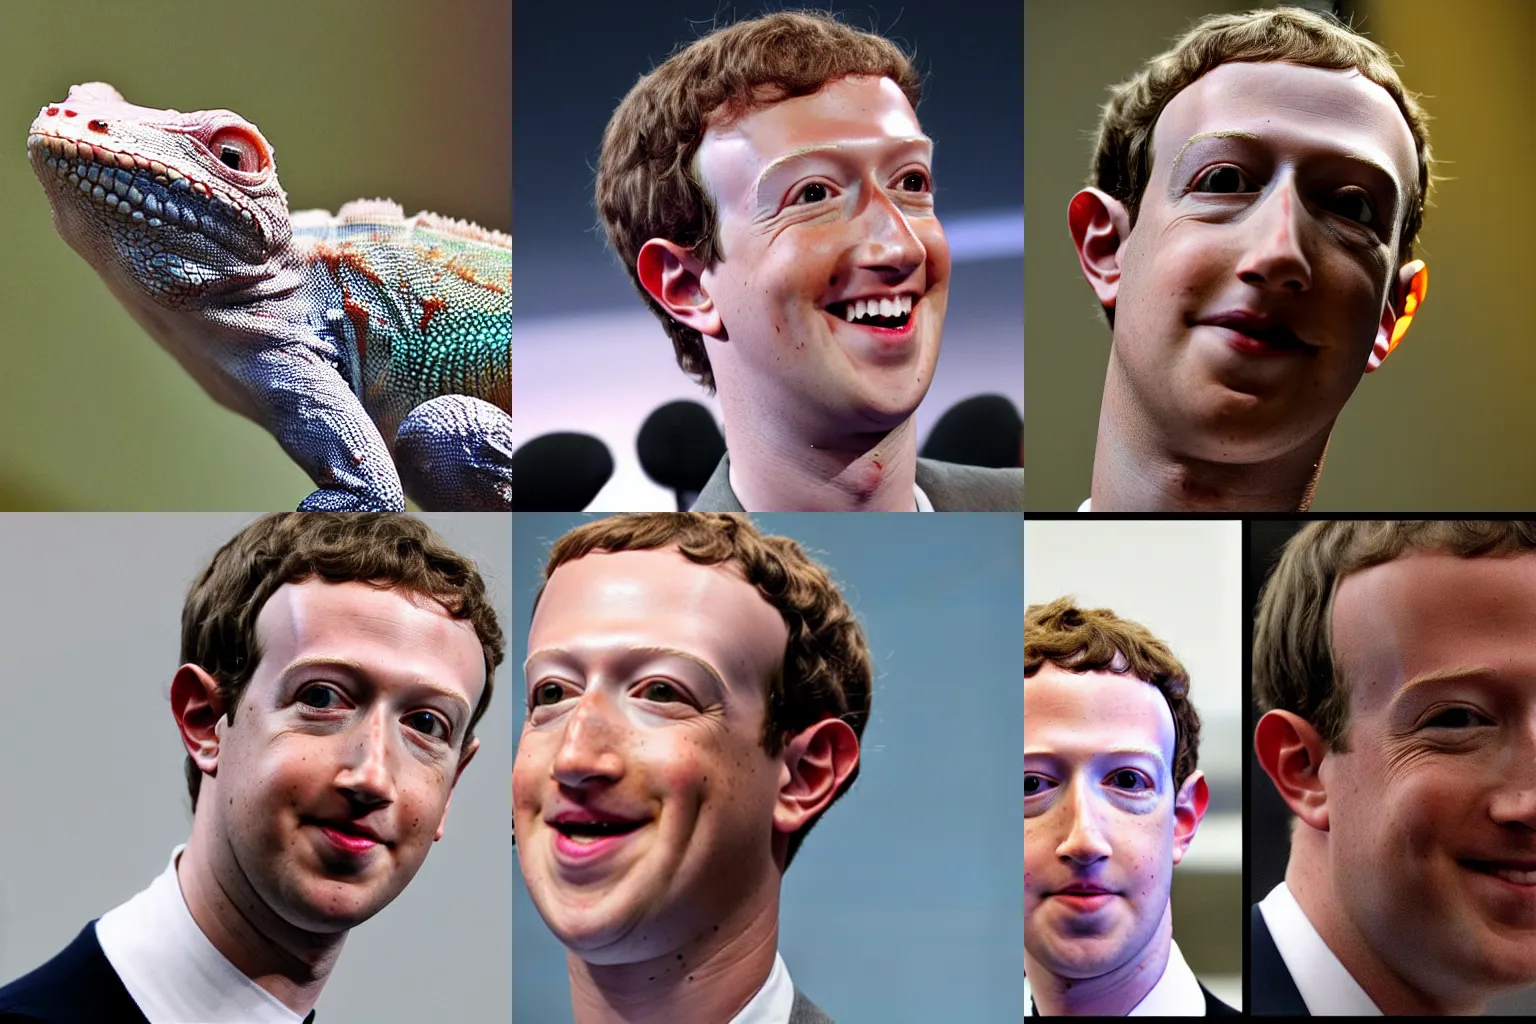 Prompt: Hybrid between Mark Zuckerberg and a lizard